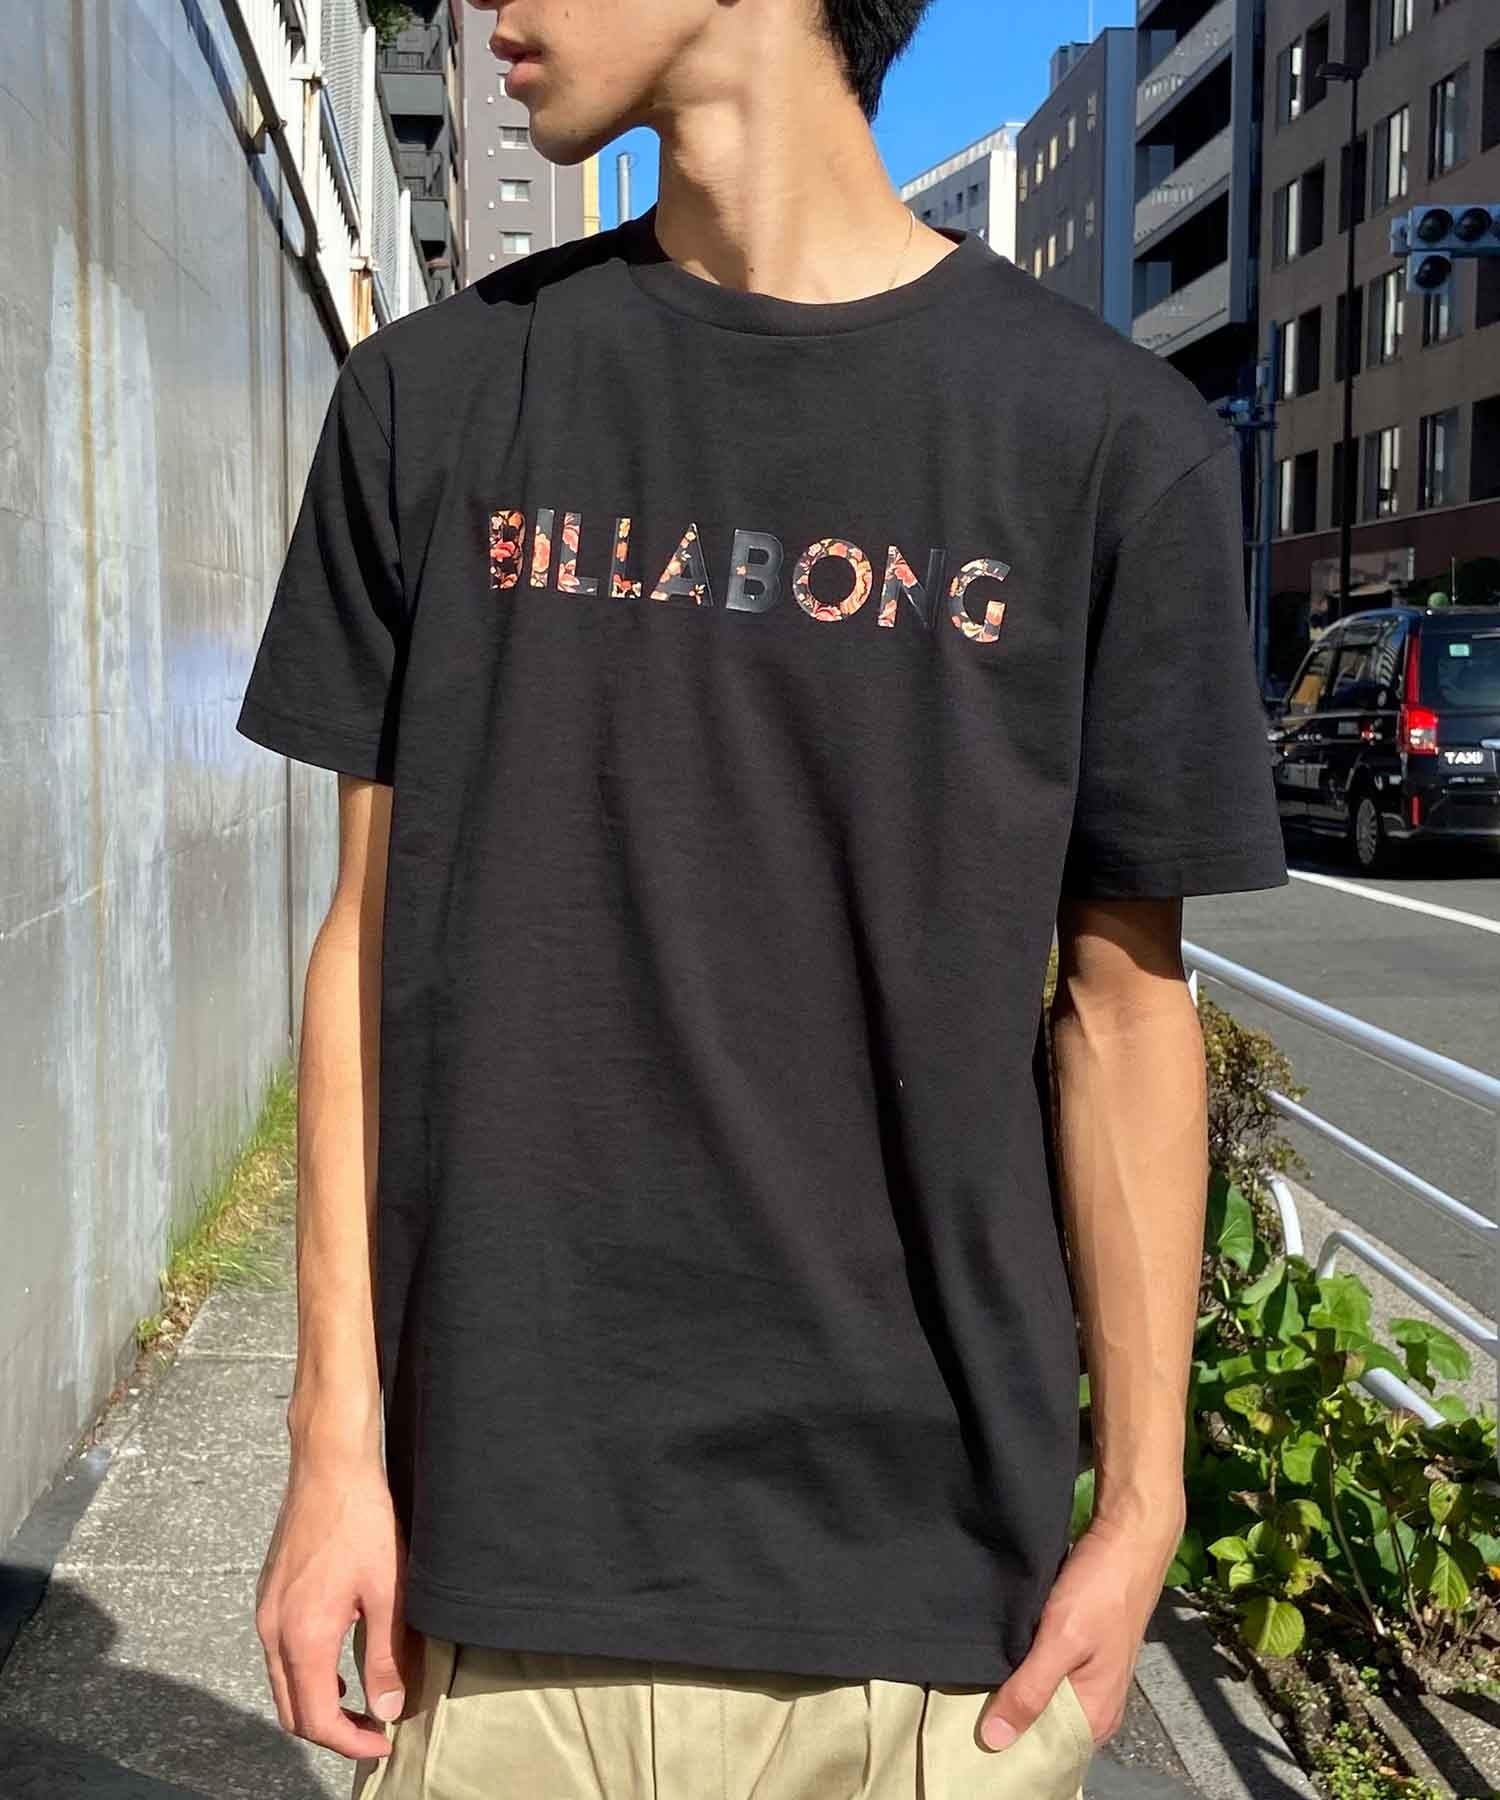 BILLABONG ビラボン UNITY LOGO Tシャツ 半袖 メンズ ロゴ BE011-200(BK2-S)